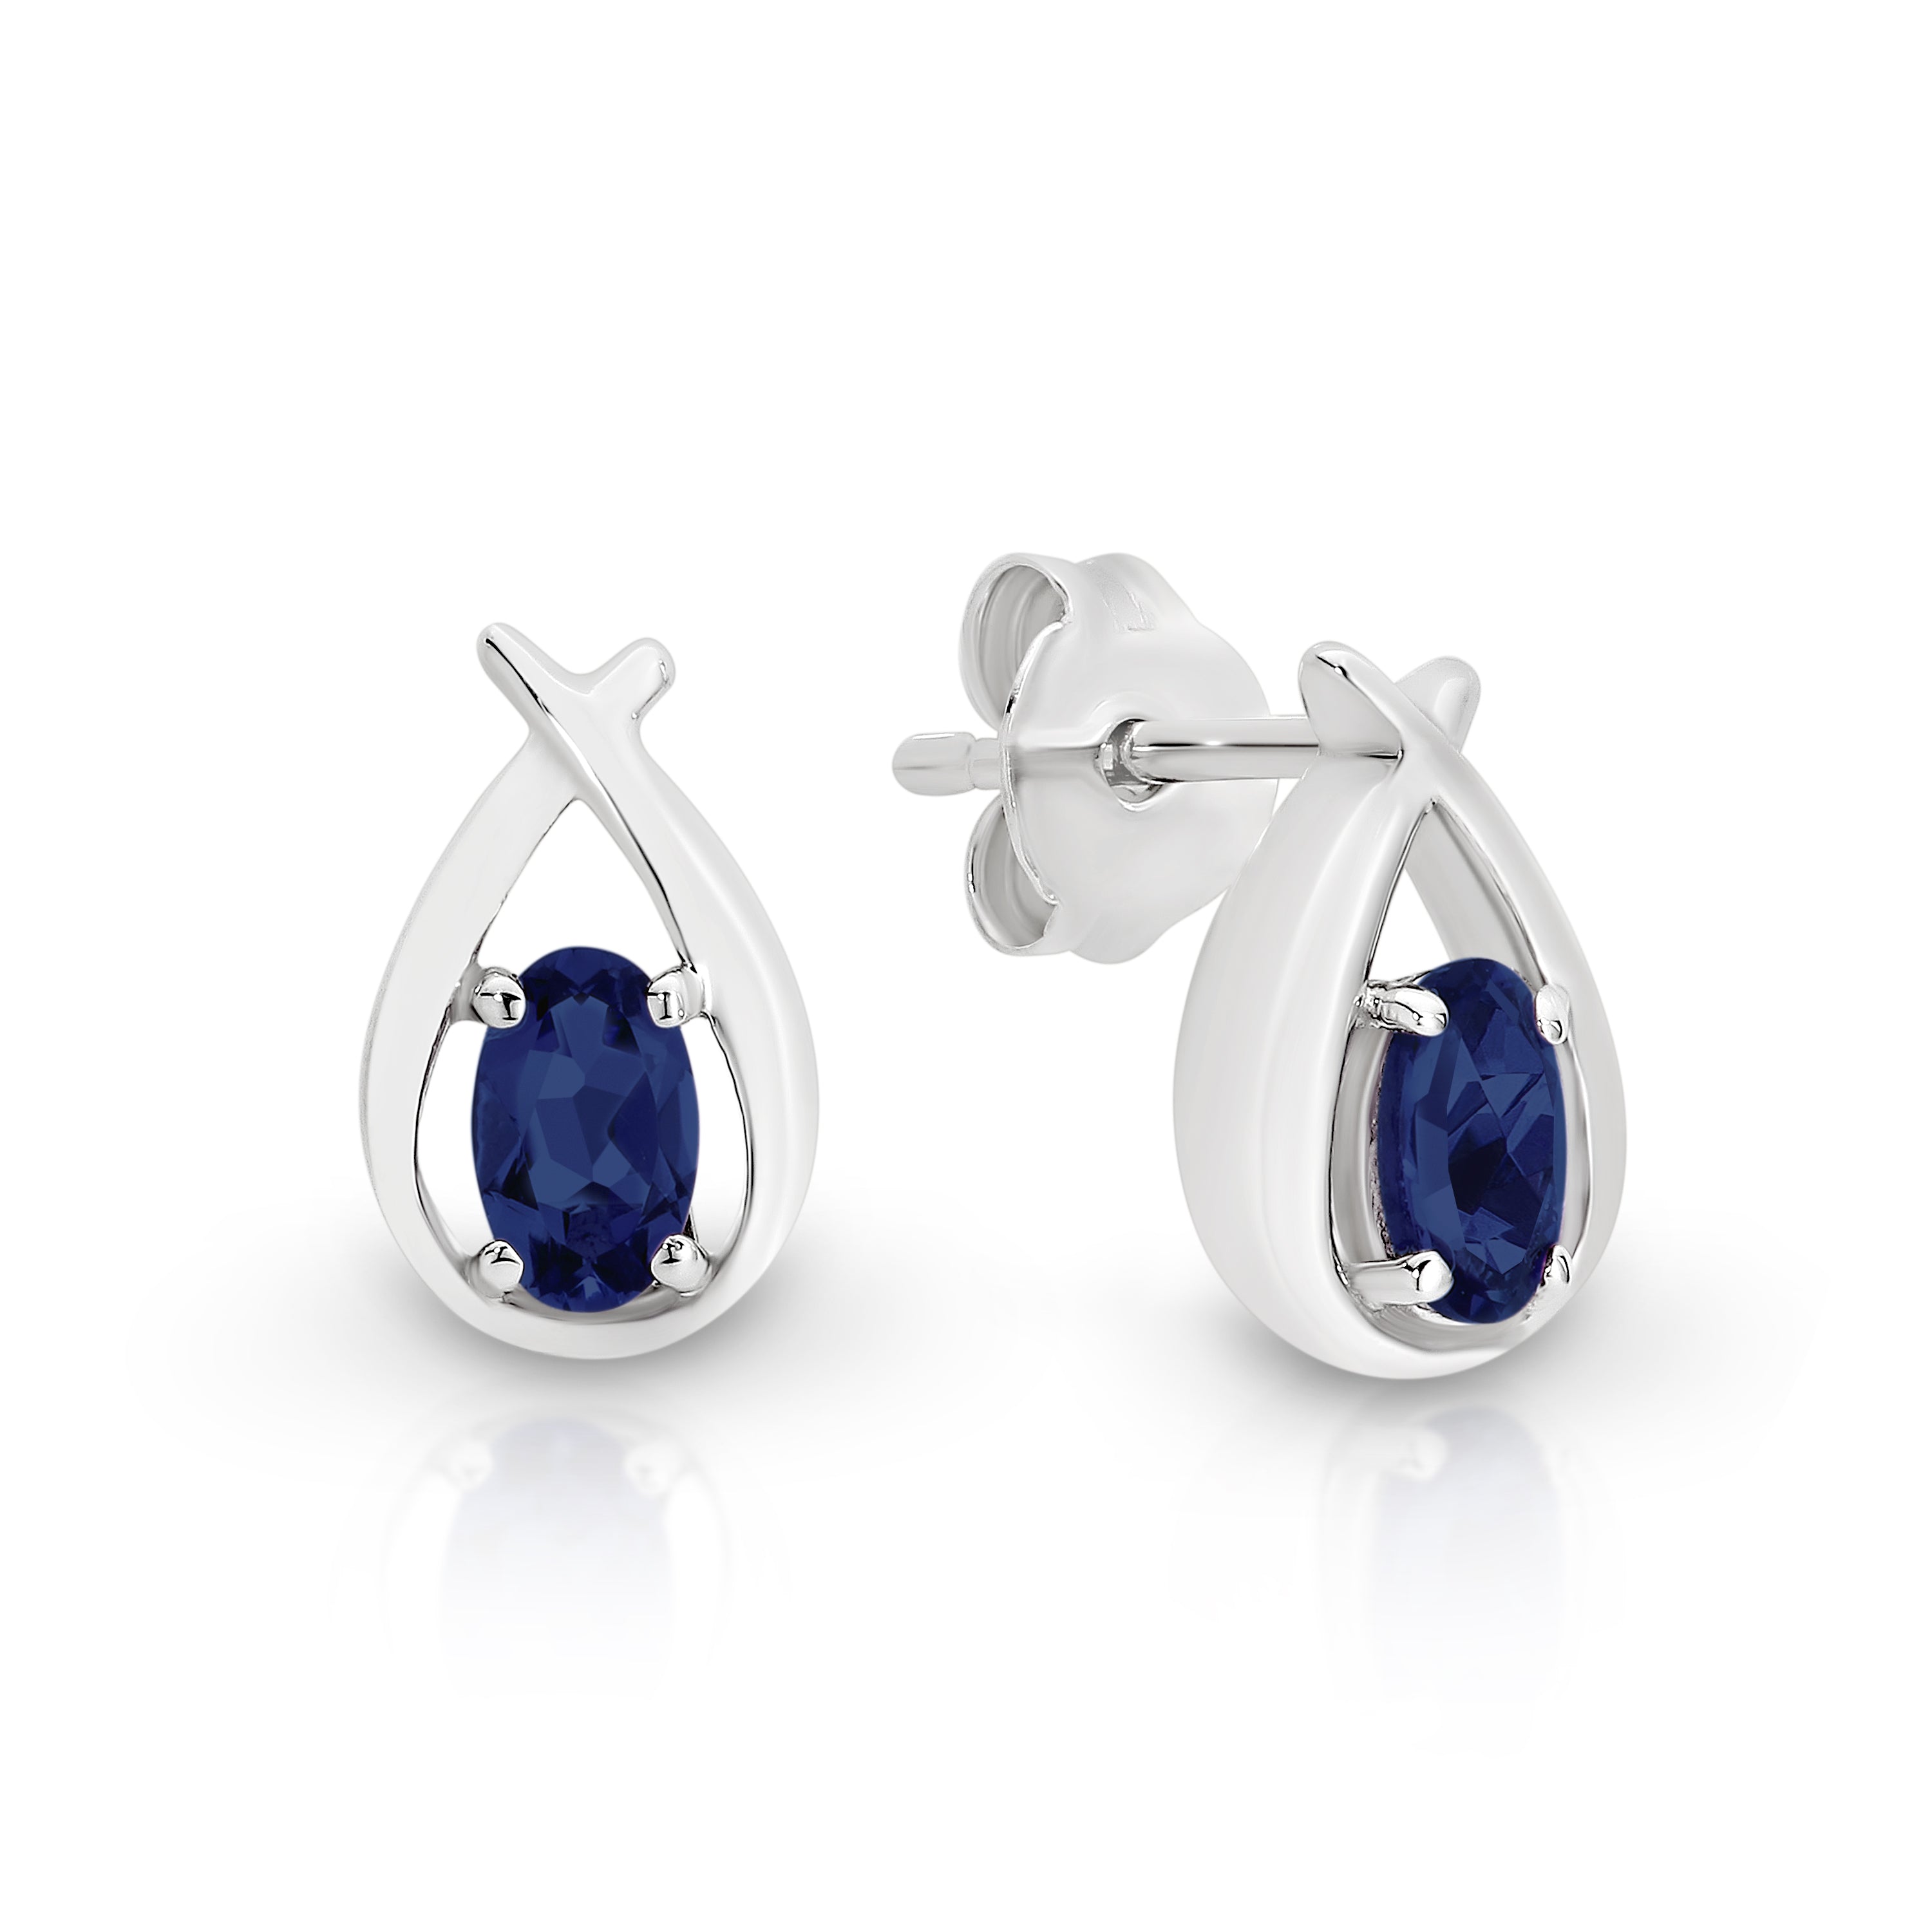 Silver created sapphire earrings